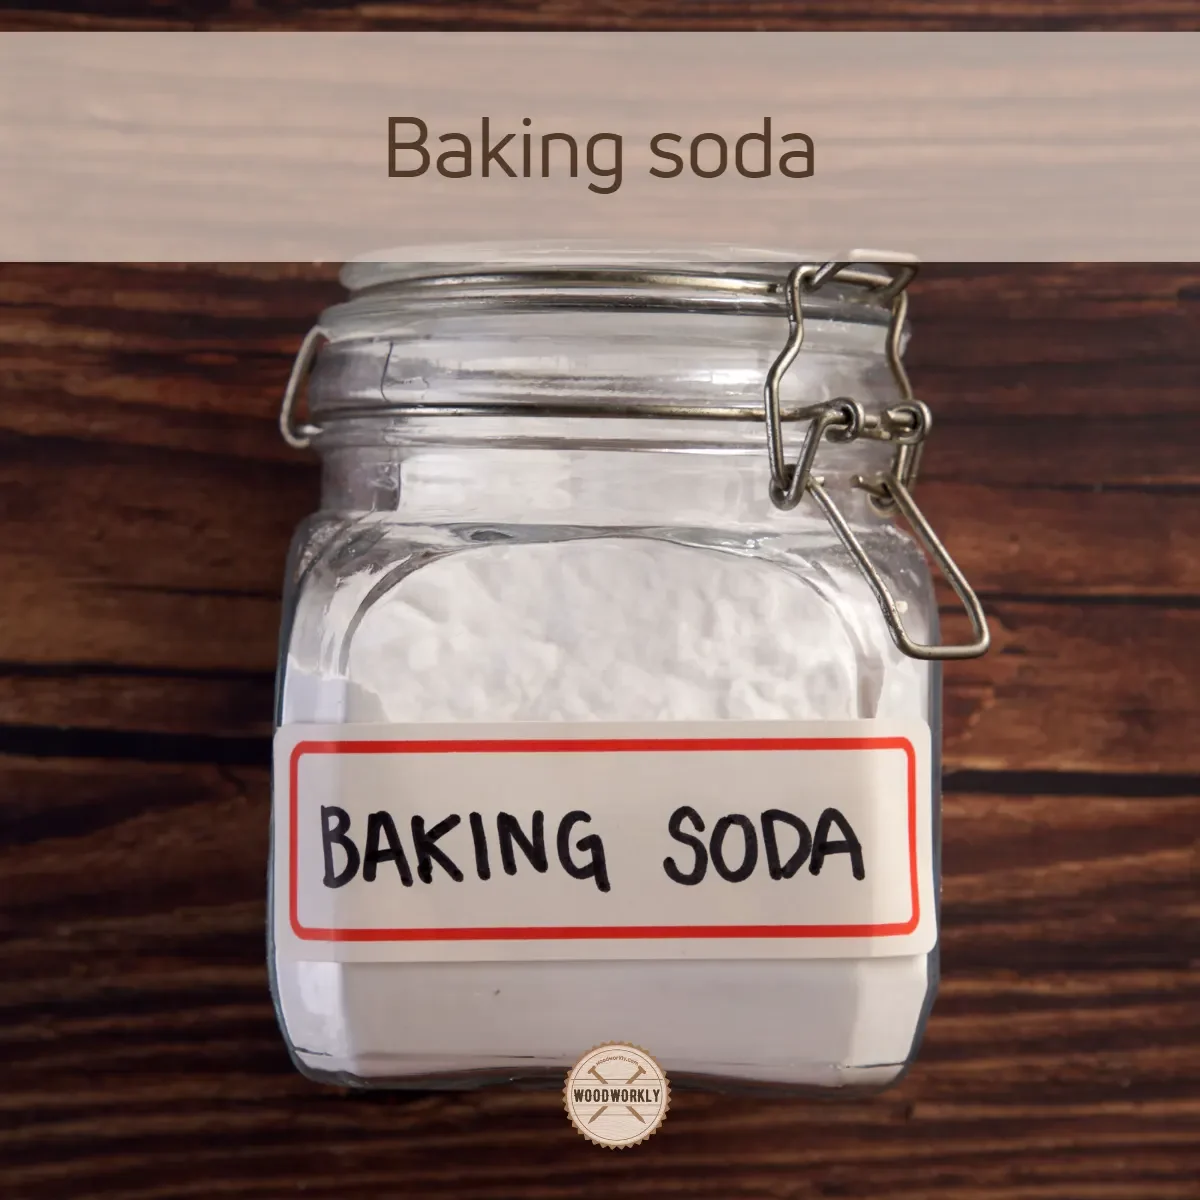 Baking soda